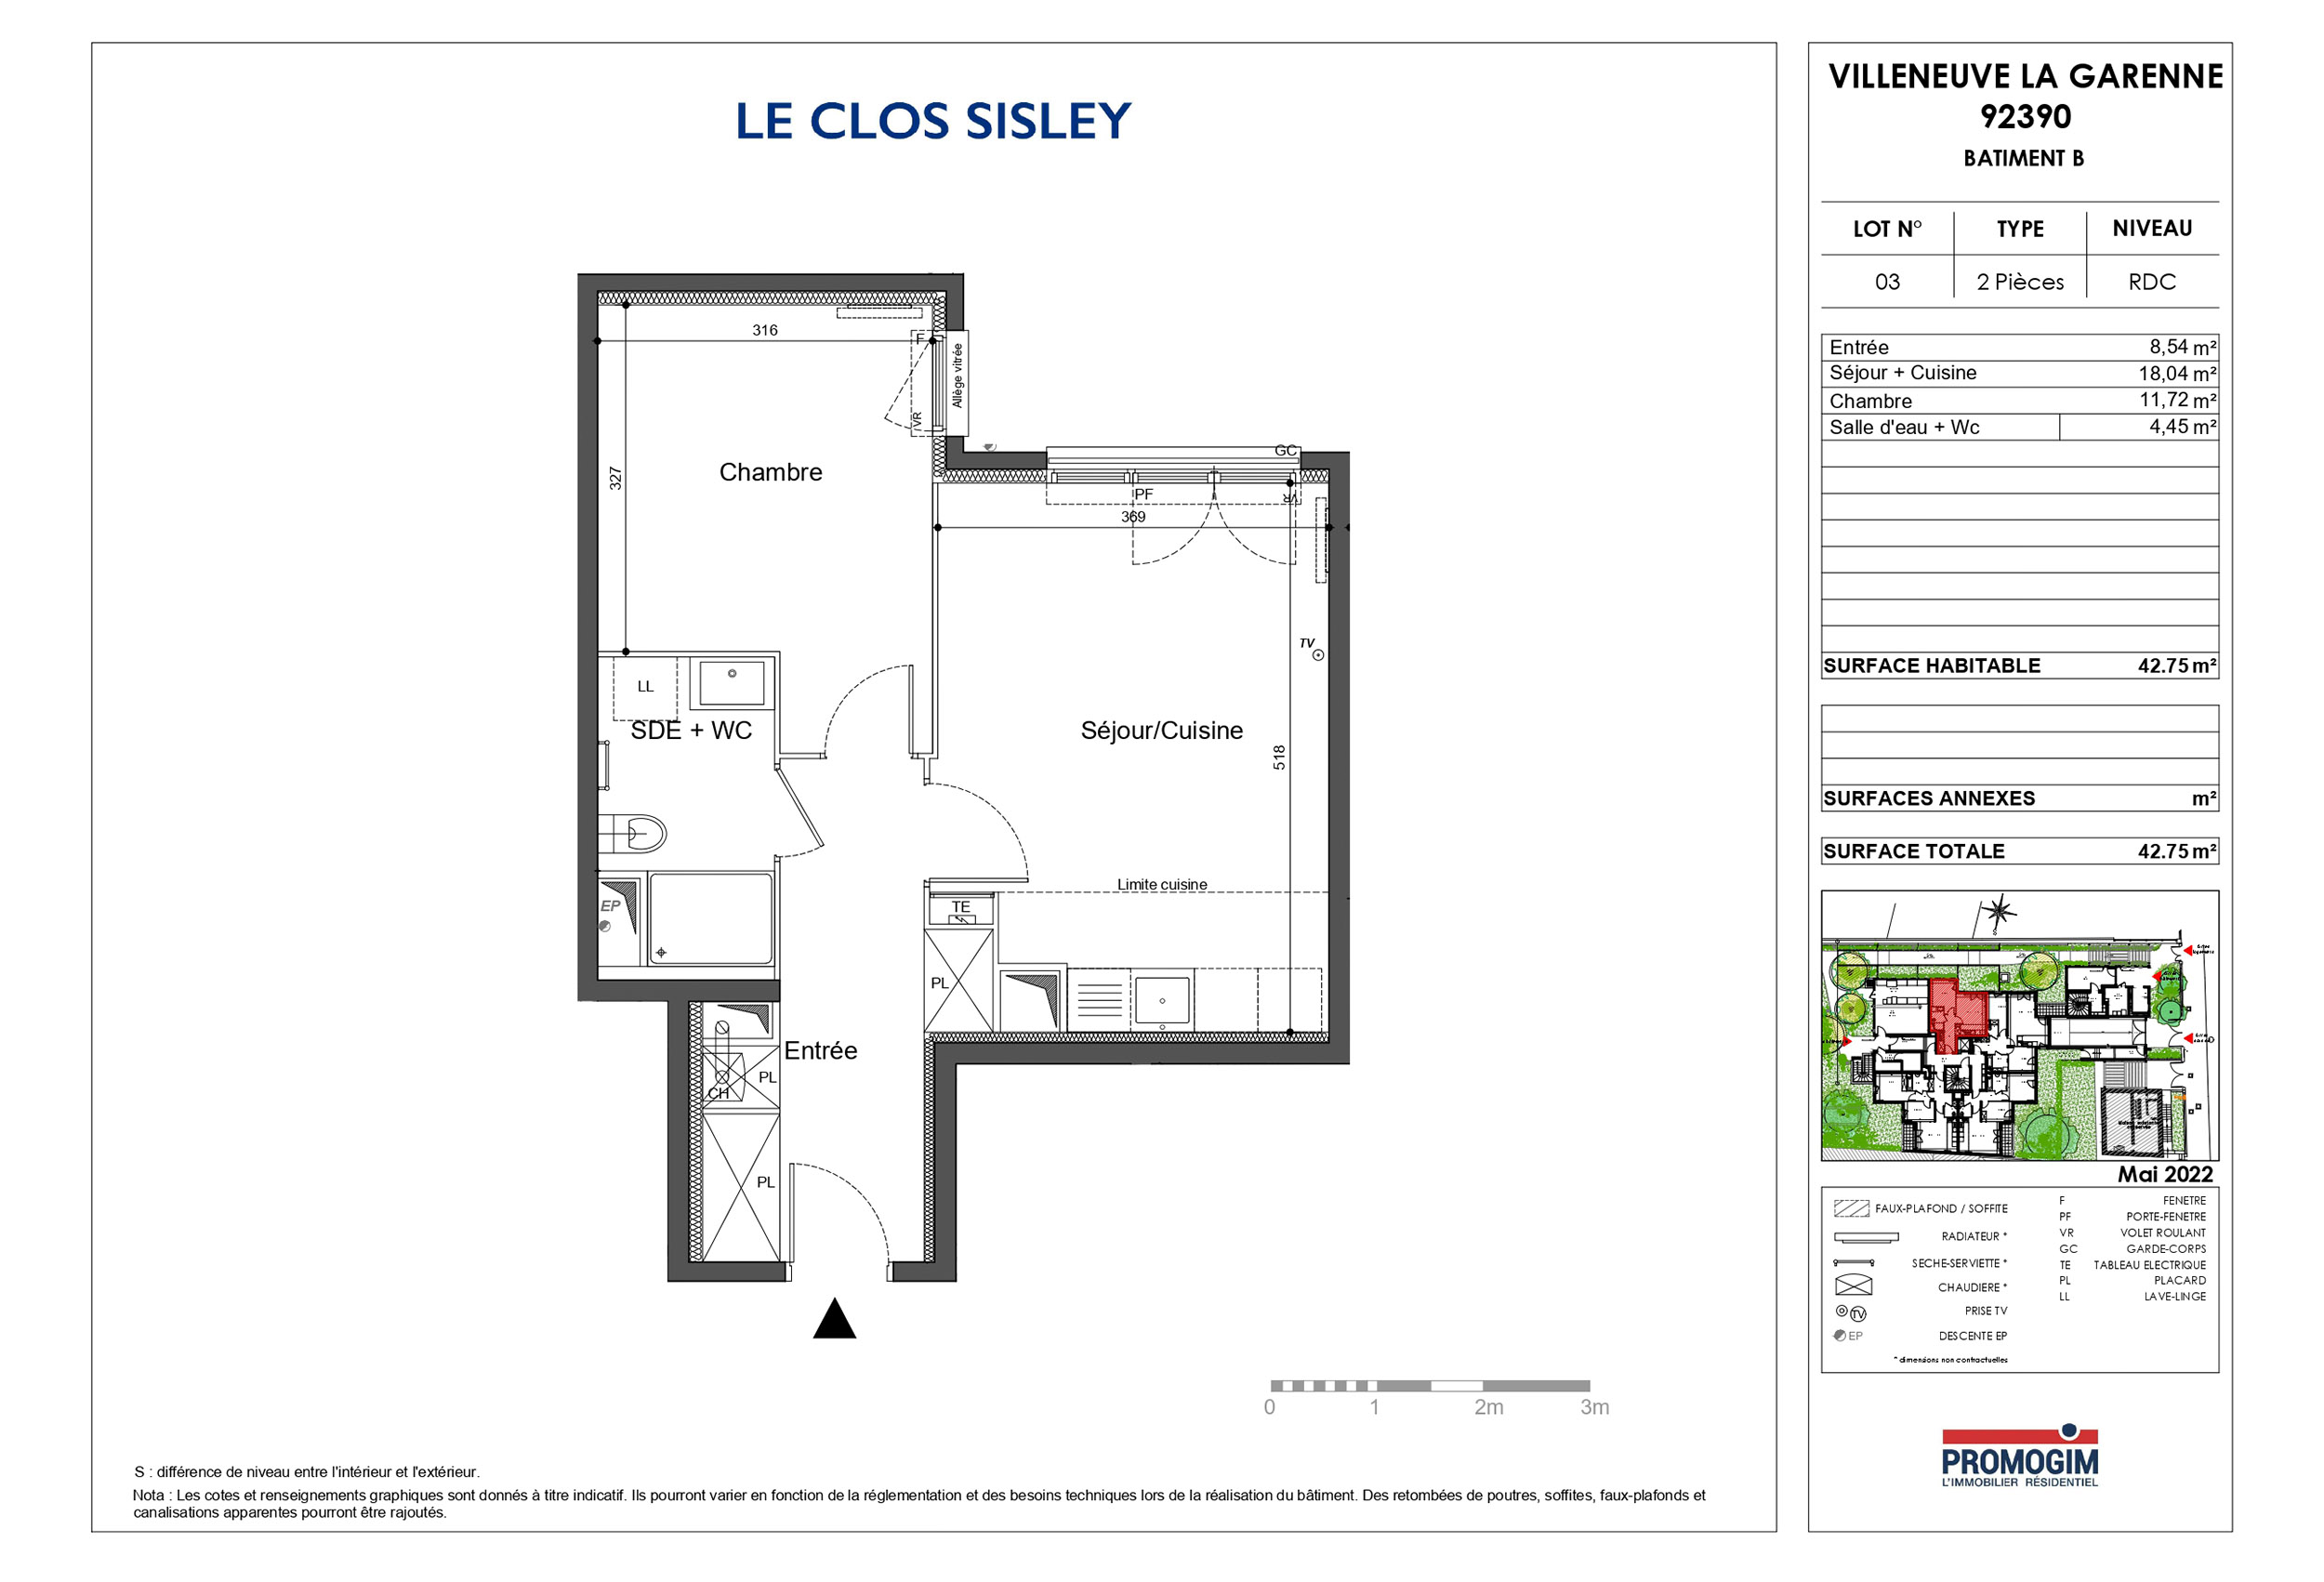 Villeneuve - Clos Sisley - Lot 03